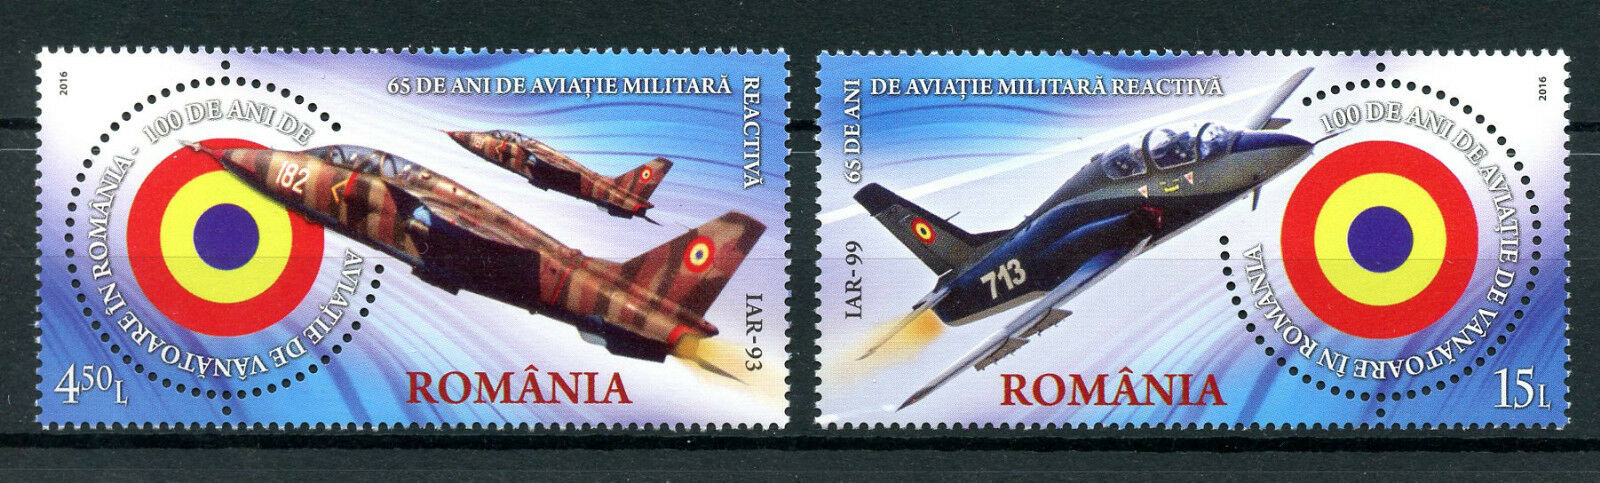 Romania 2016 MNH Aviation Anniversaries Coanda to F-16 2v Set Stamps